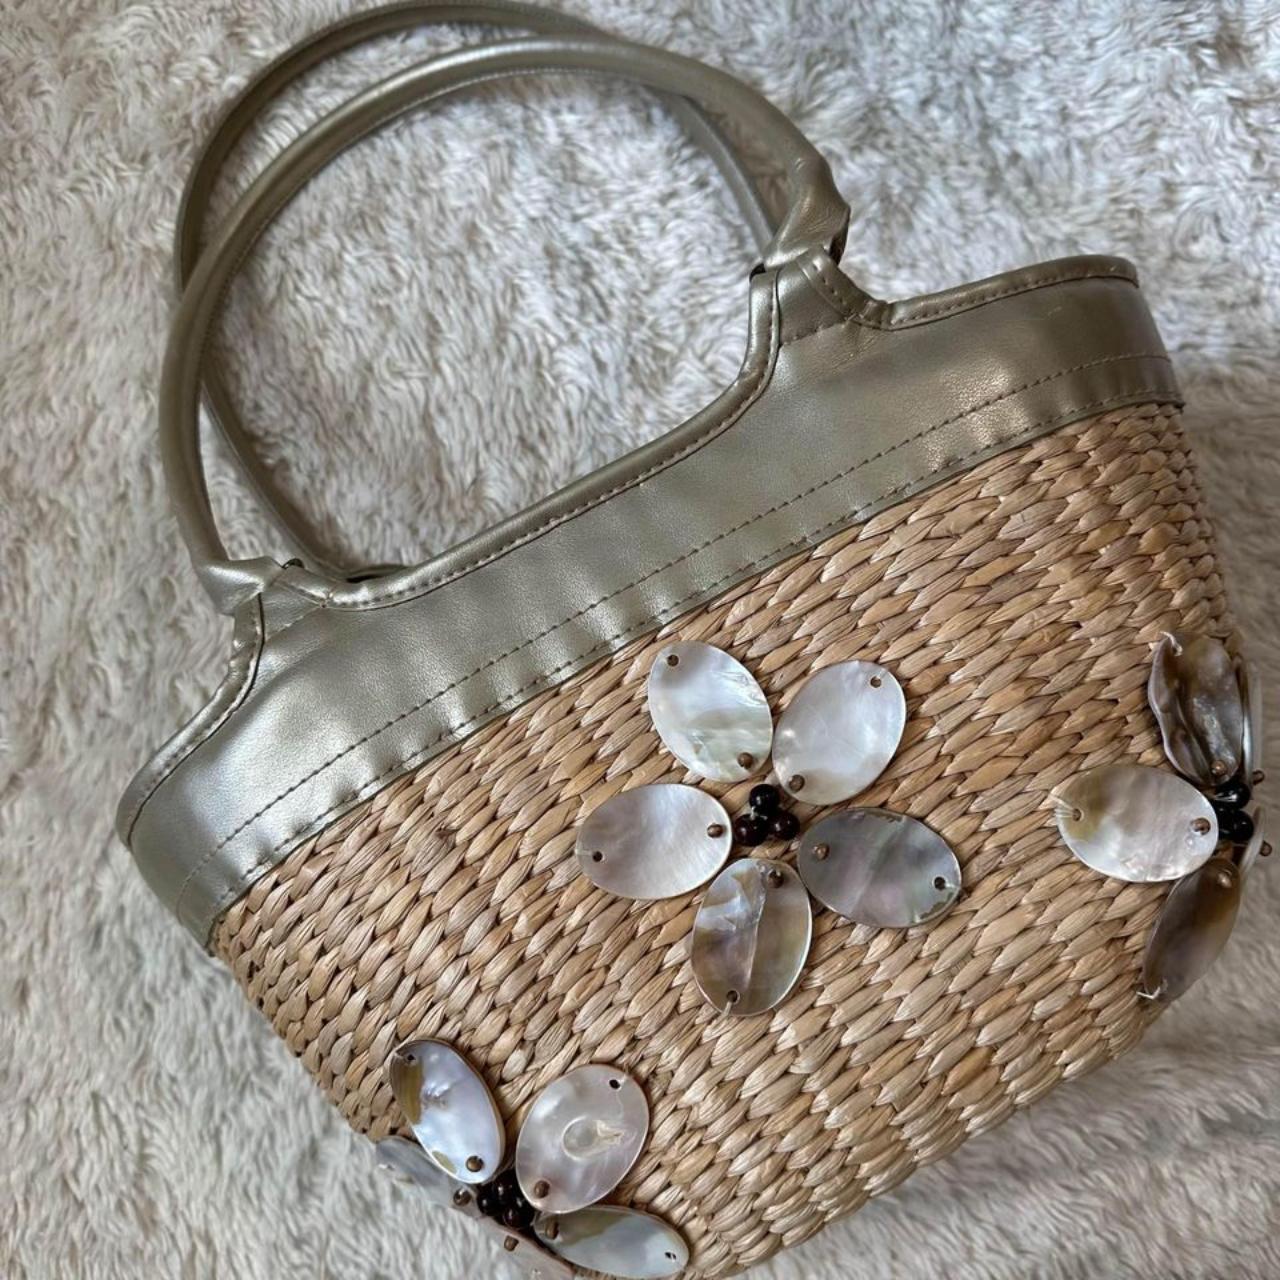 13 Best Basket Bags for Easy, French-Girl Elegance